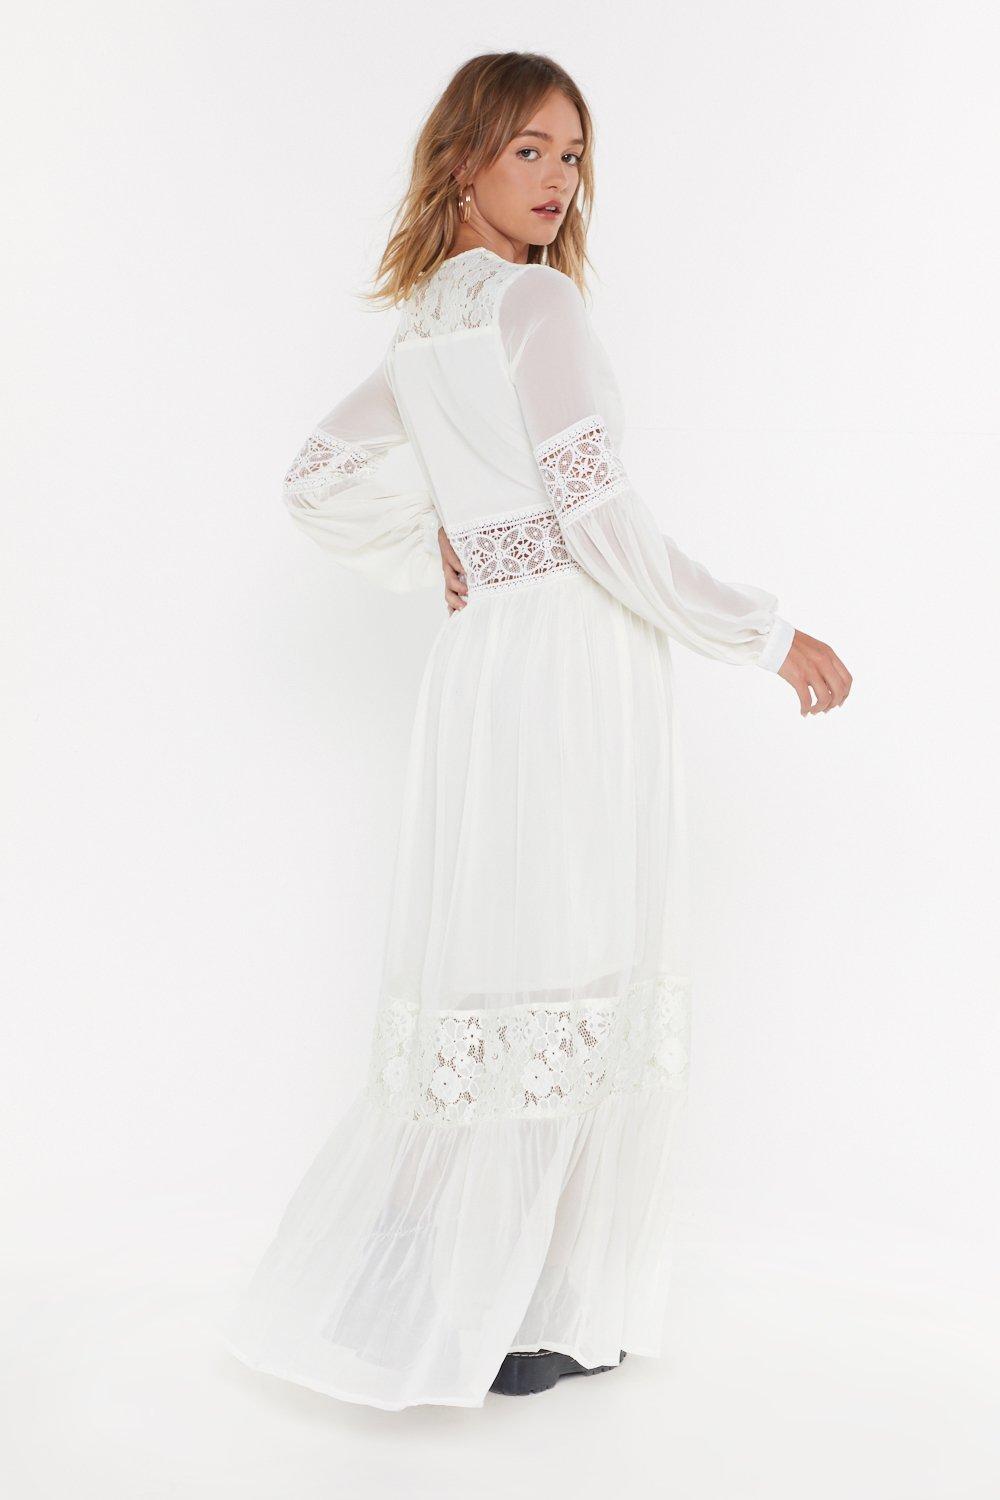 boho white lace dress with sleeves